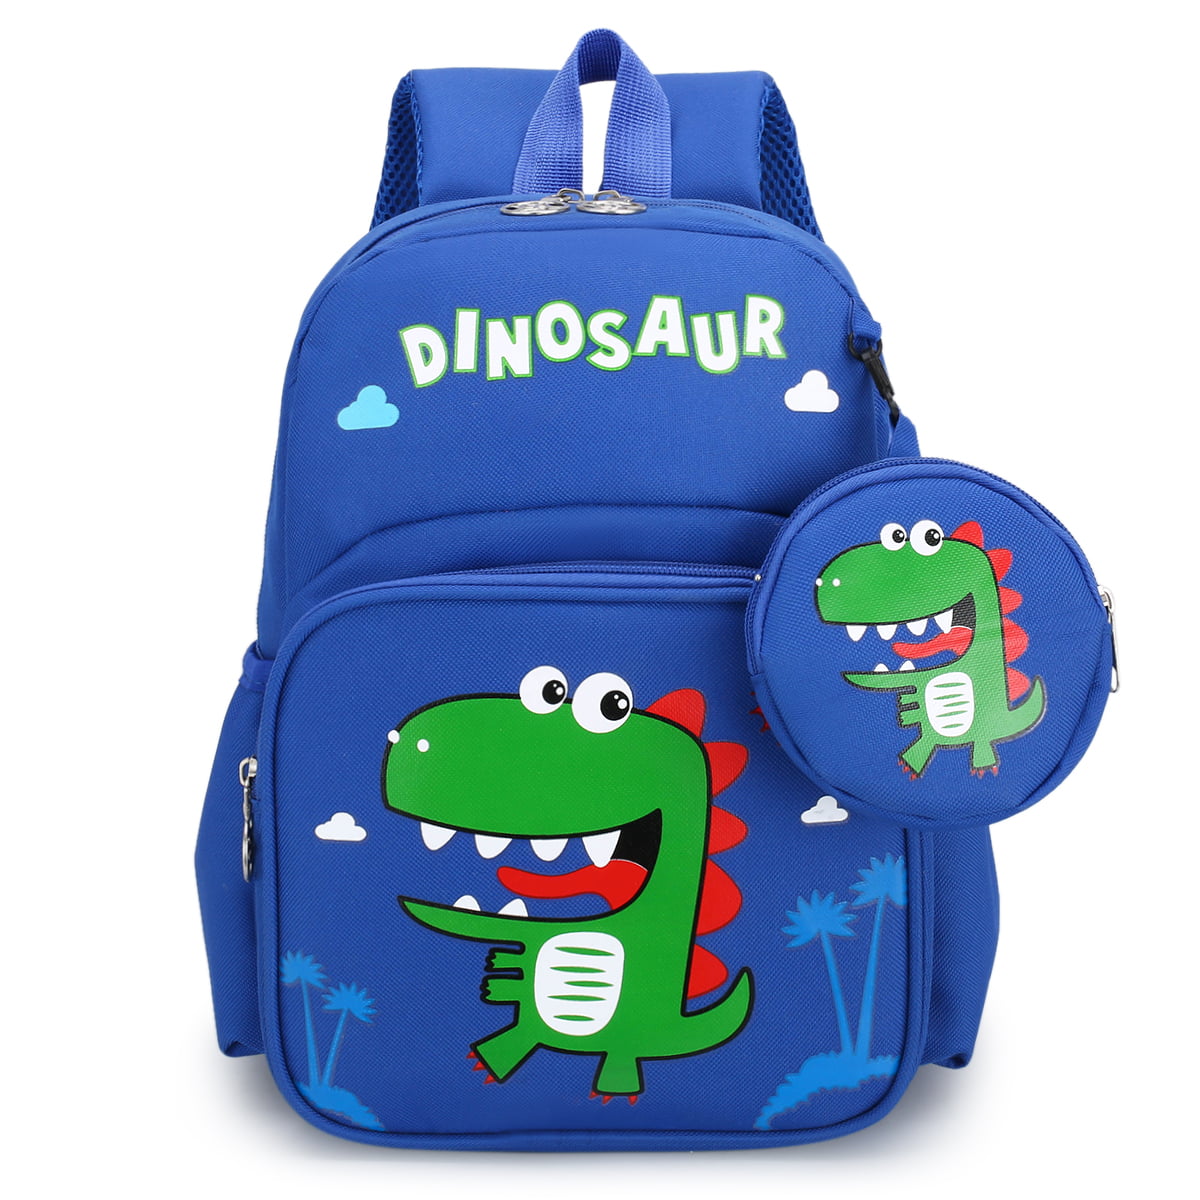 Personalised Dinosaur Dino Blue Boys Kids Children's School Bag Backpack 